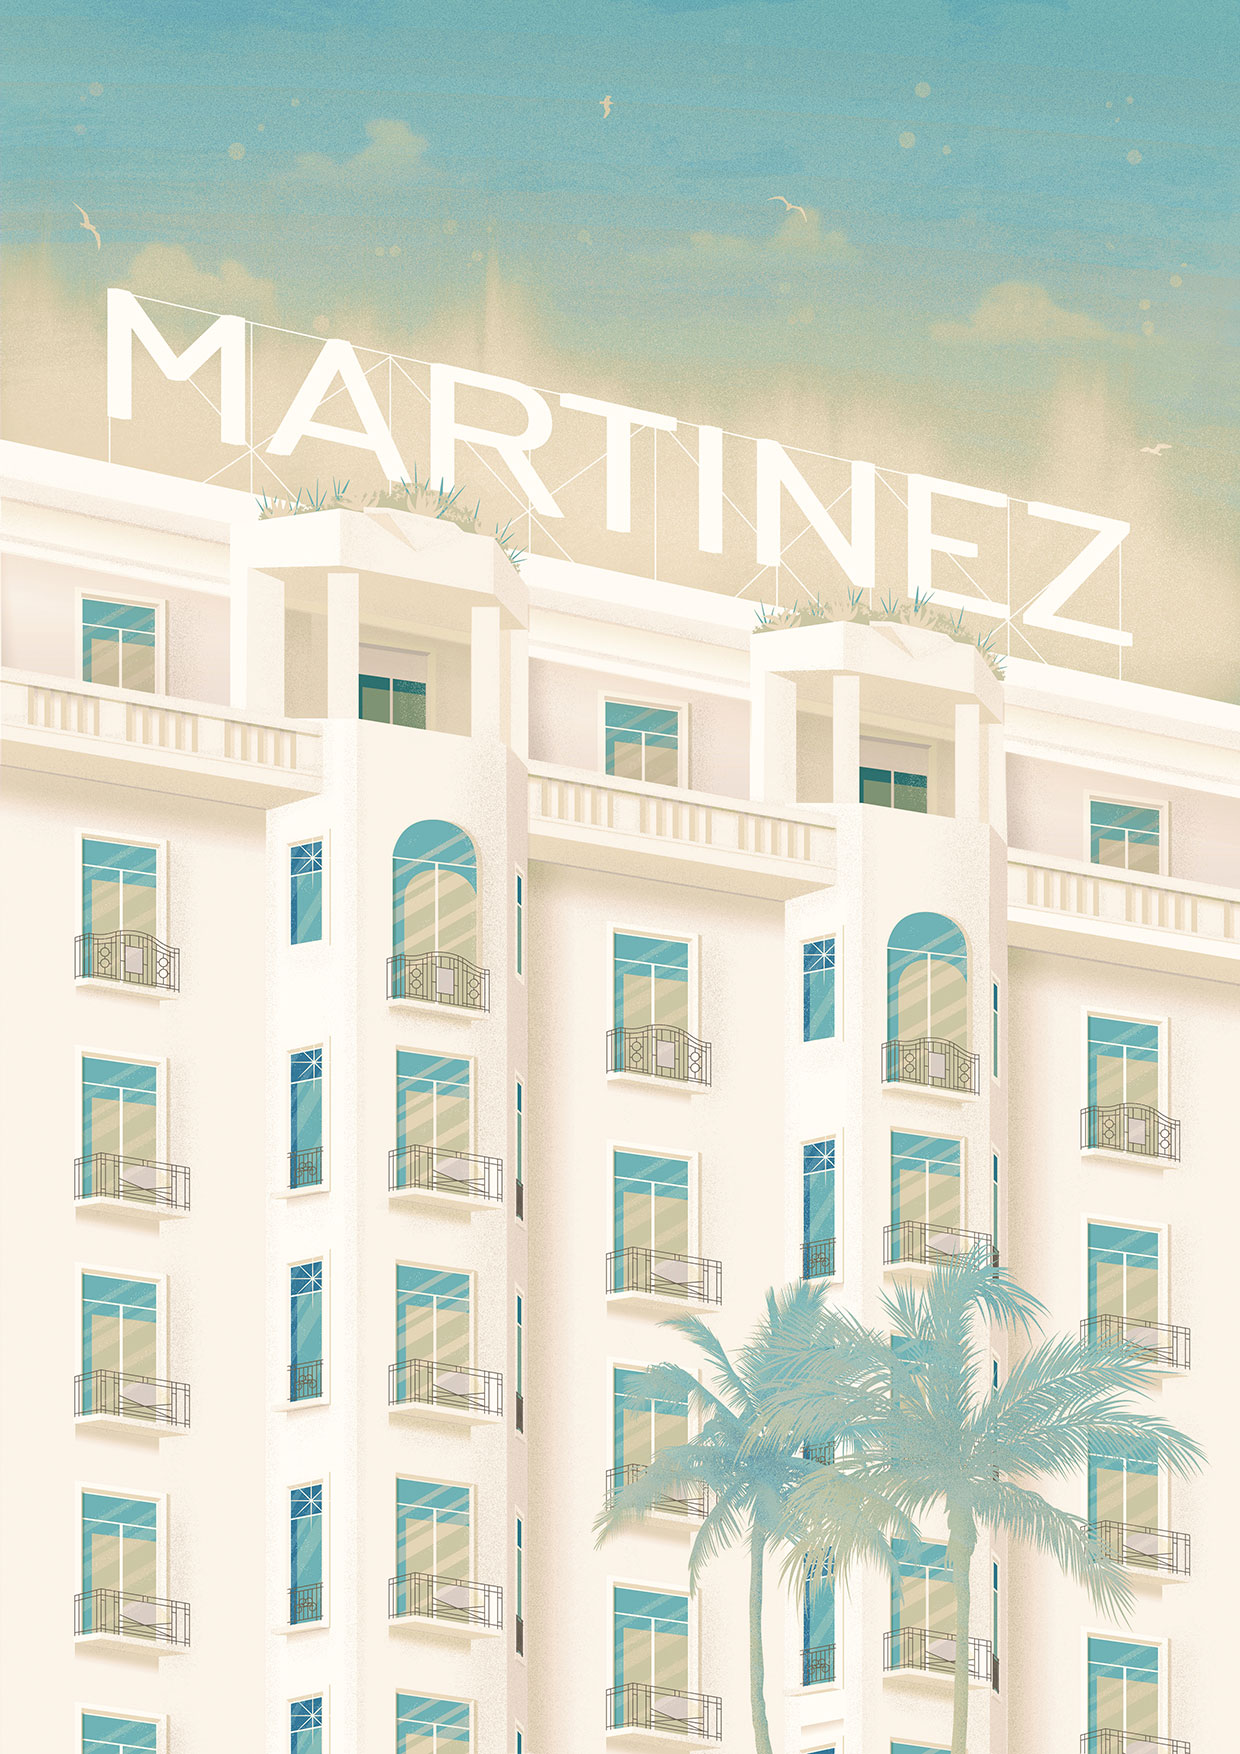  Martinez Hotel, Cannes. 2014. 